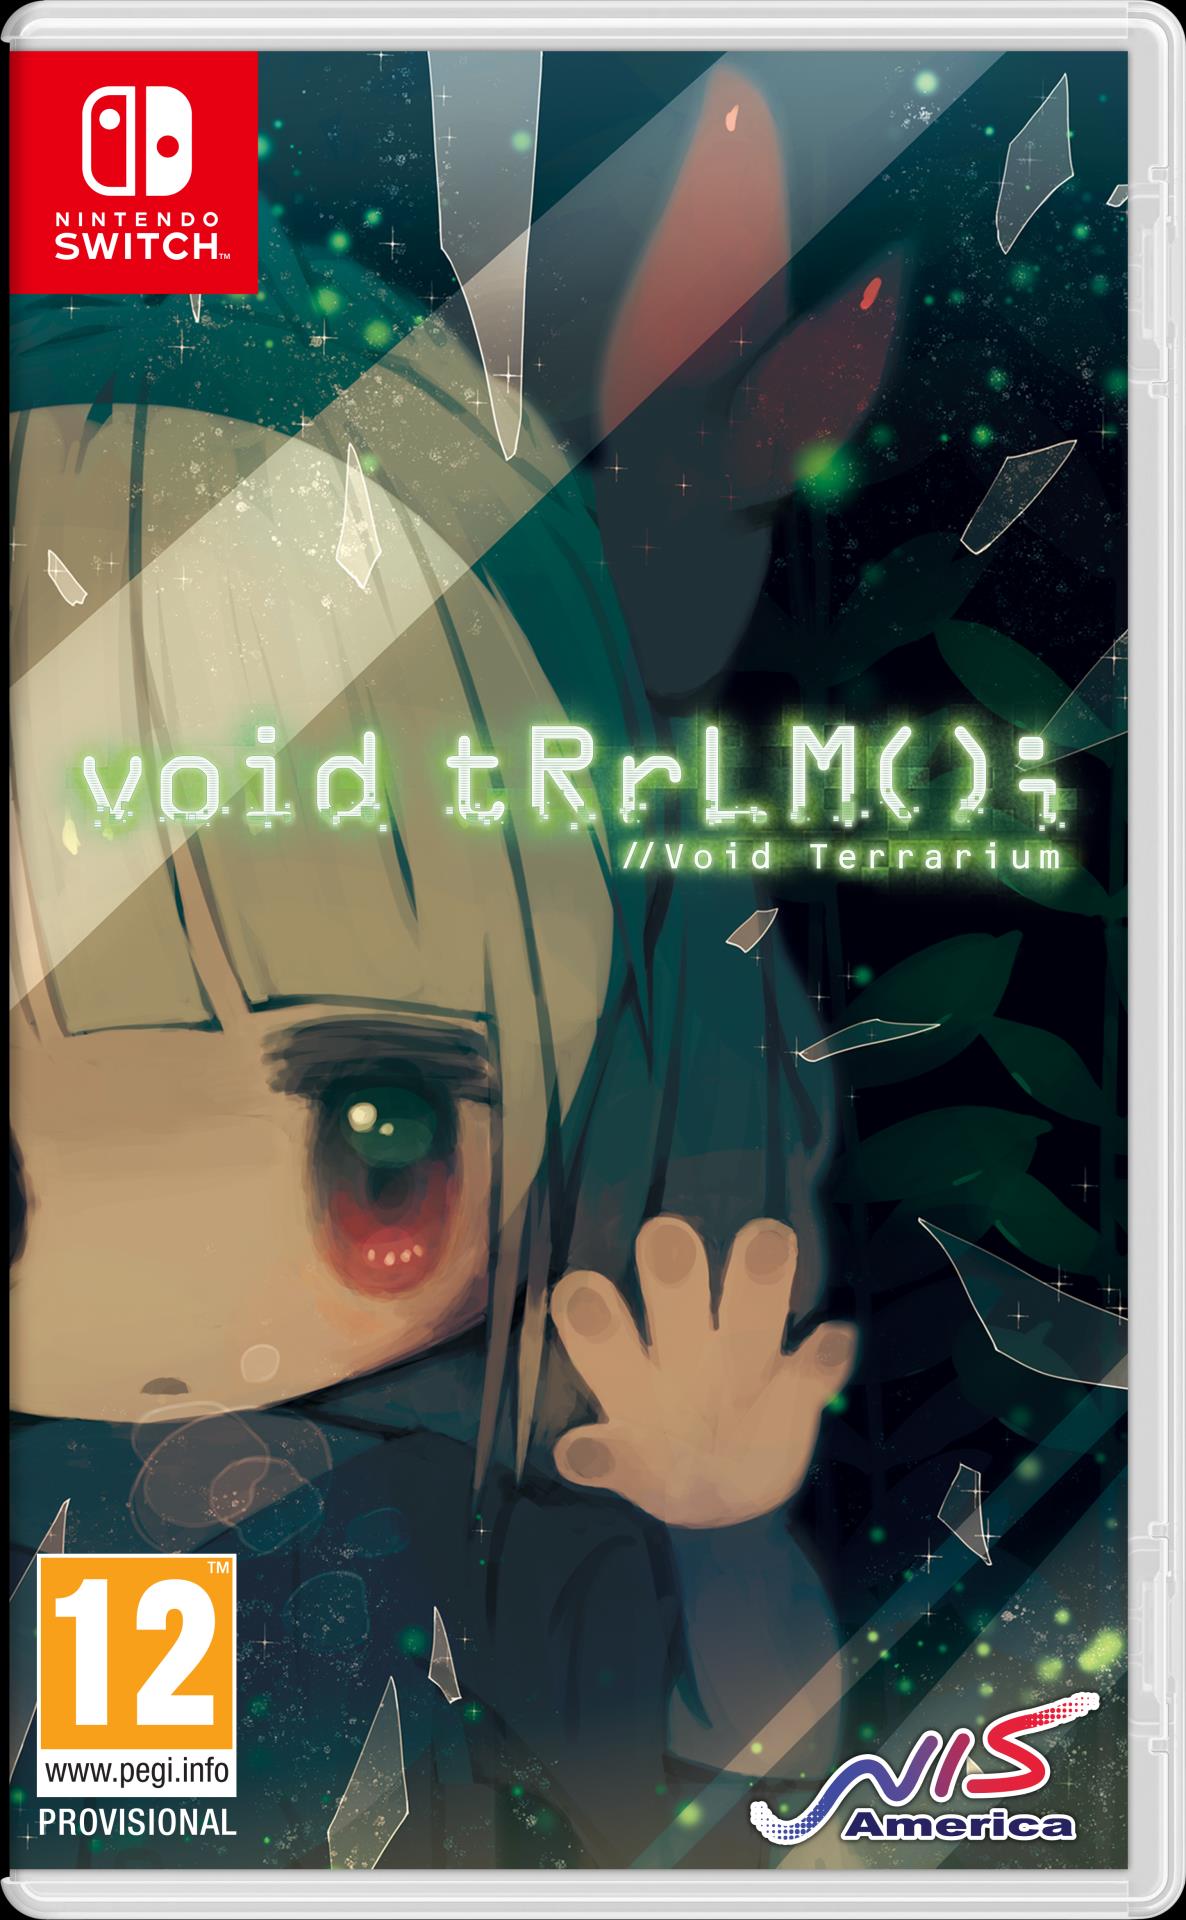 § void tRrLM() //Void Terrarium